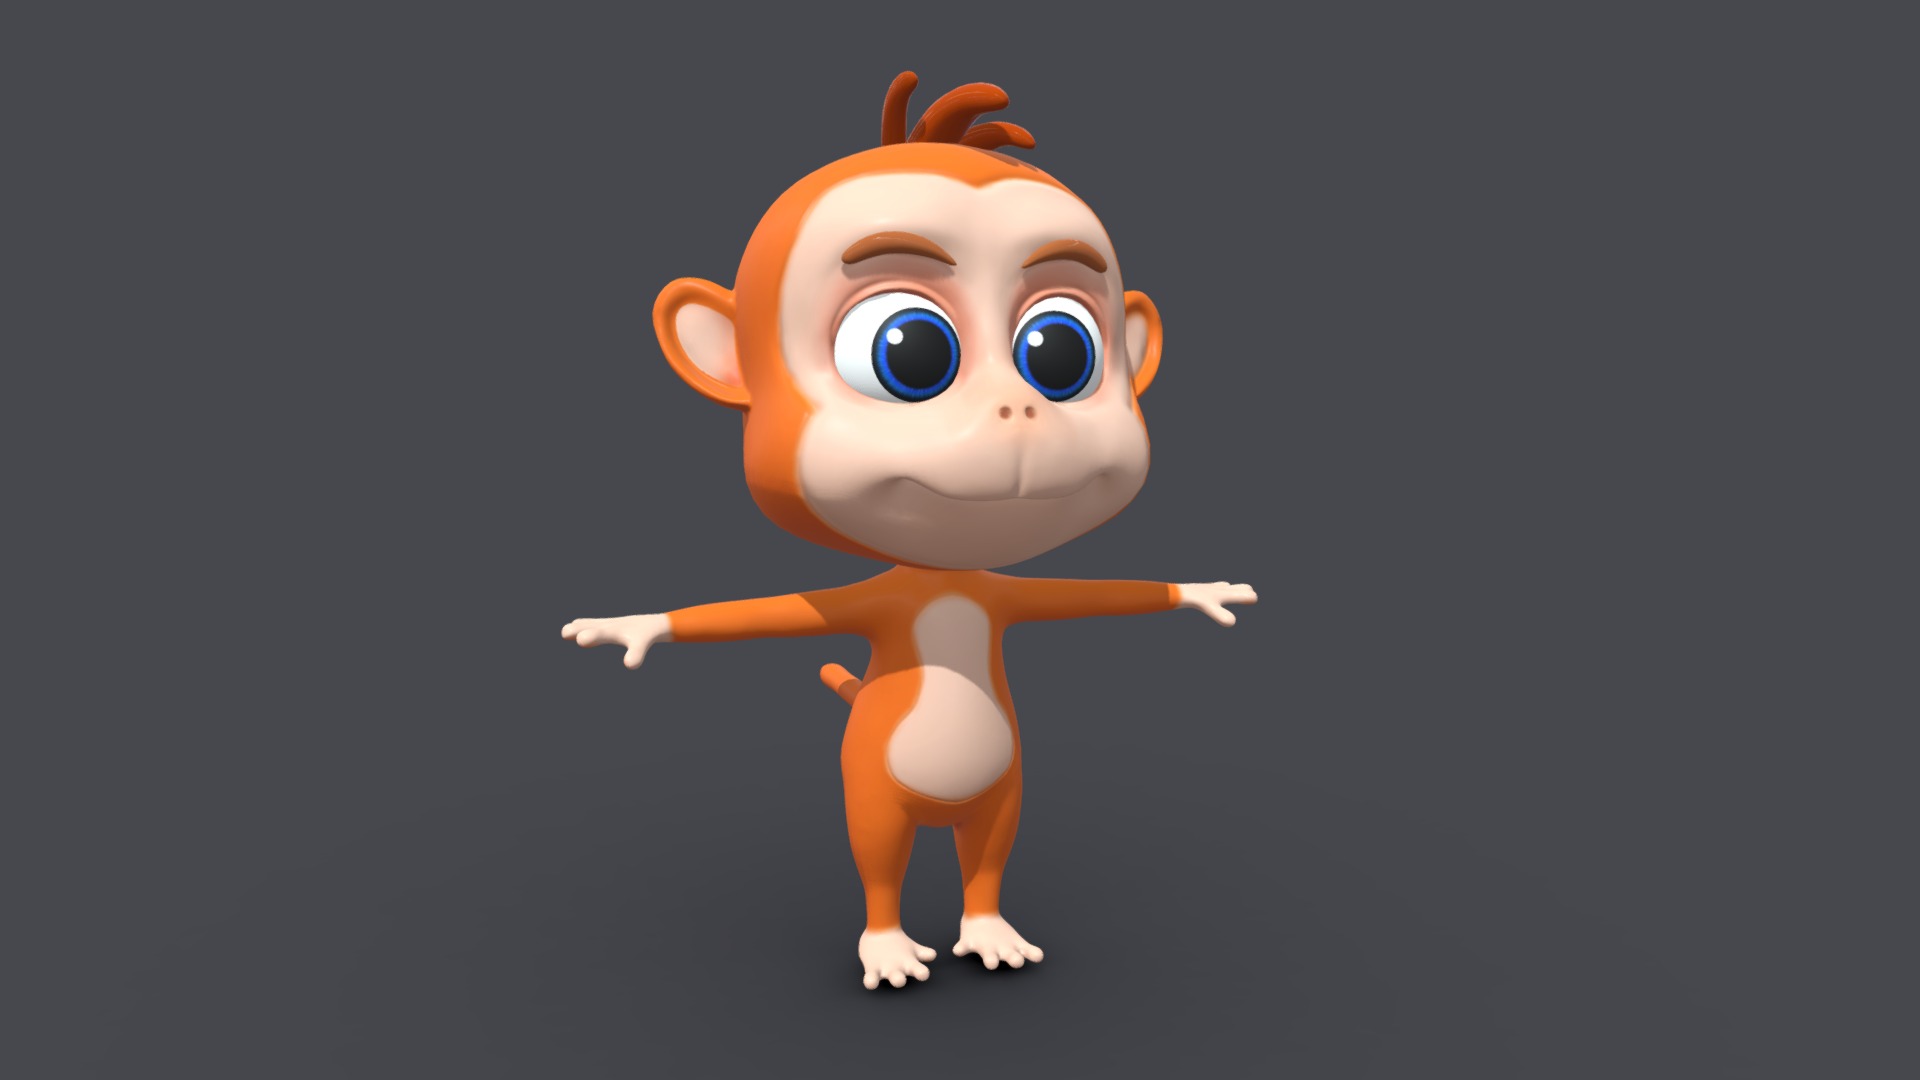 3D model Asset – Cartoons – Animal – Monkey – Rig 3D - This is a 3D model of the Asset - Cartoons - Animal - Monkey - Rig 3D. The 3D model is about a cartoon character with blue eyes.